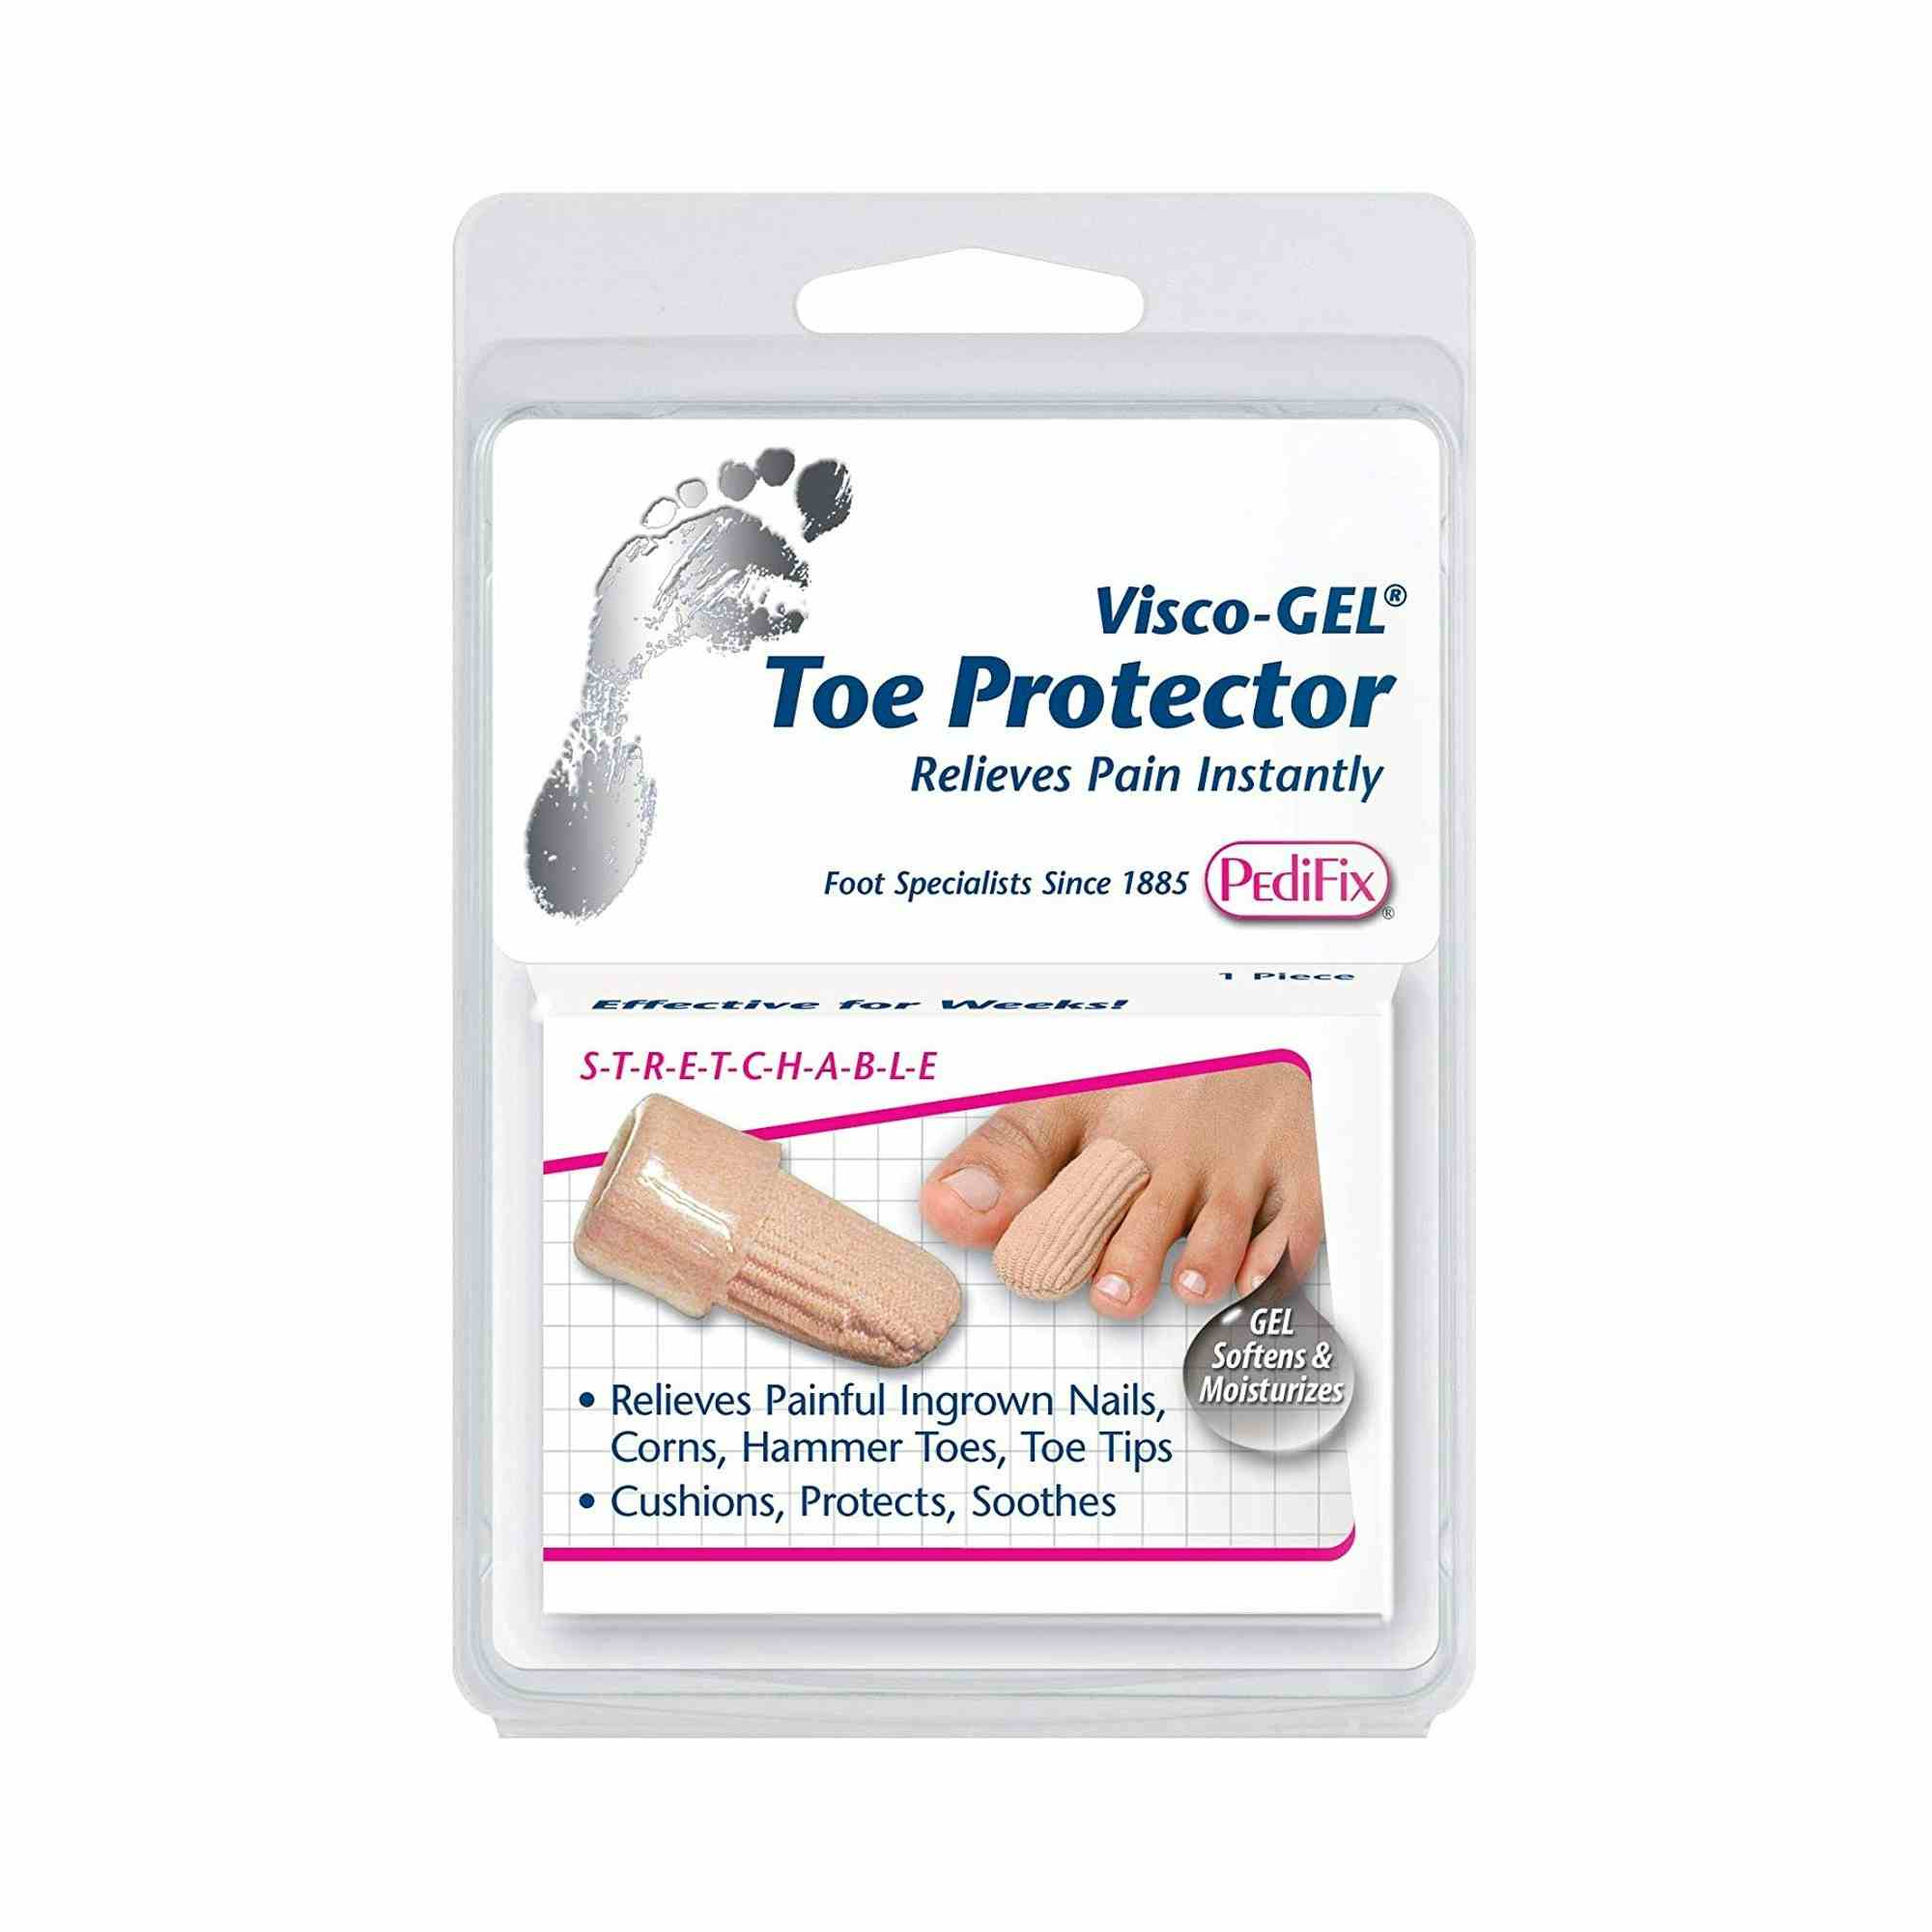 Visco-GEL Toe Protector, P82-L, Large - 1 Each